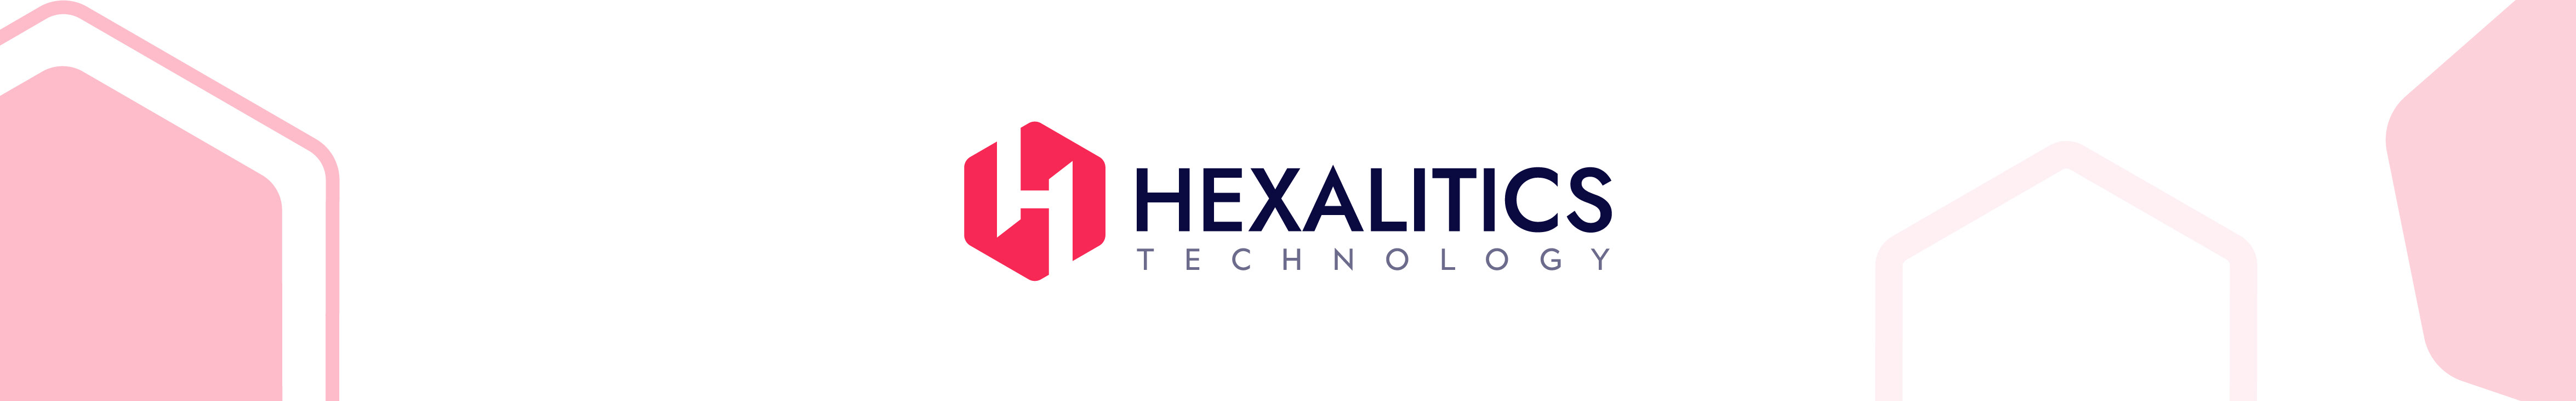 Hexalitics Technology のプロファイルバナー